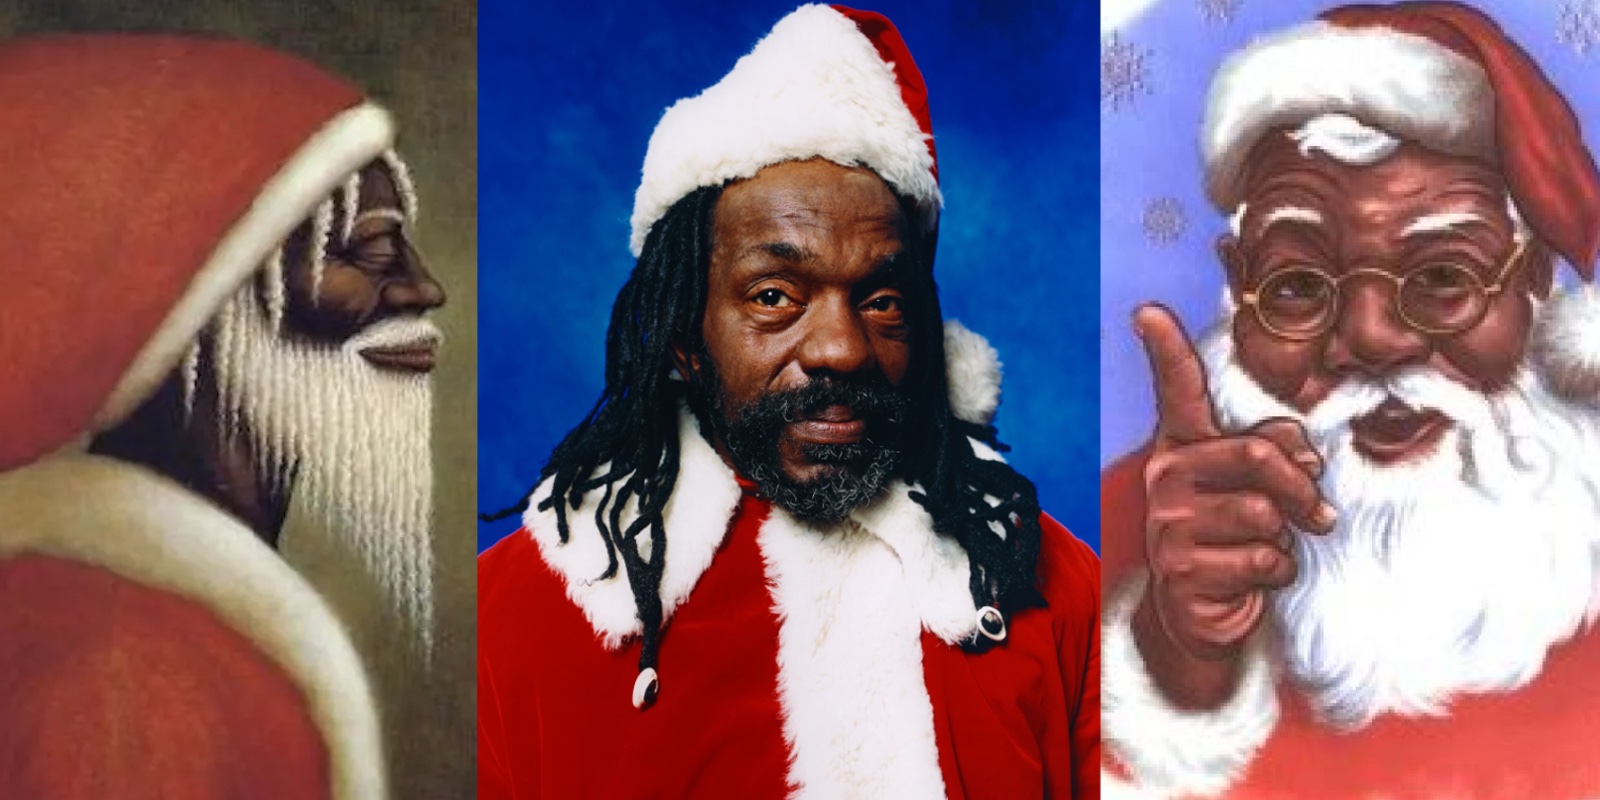 Christmas Leftovers 4 - Black Santa Peel 92 reggae xmas